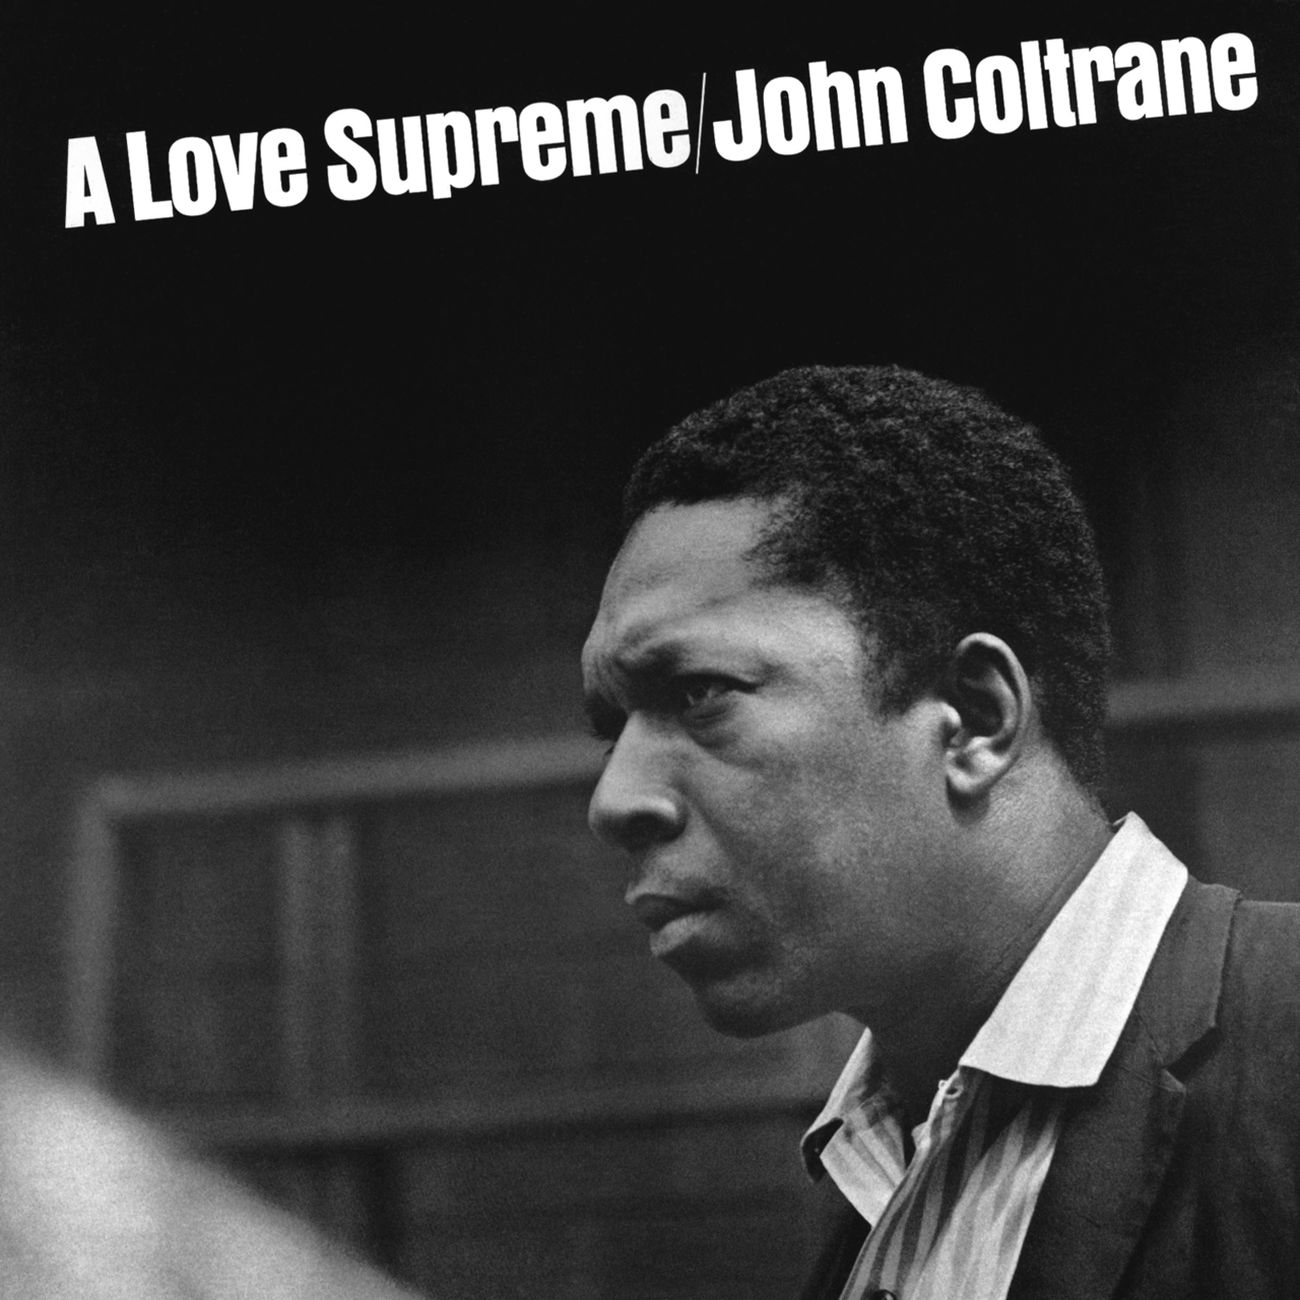 John Coltrane, A Love Supreme (1965)